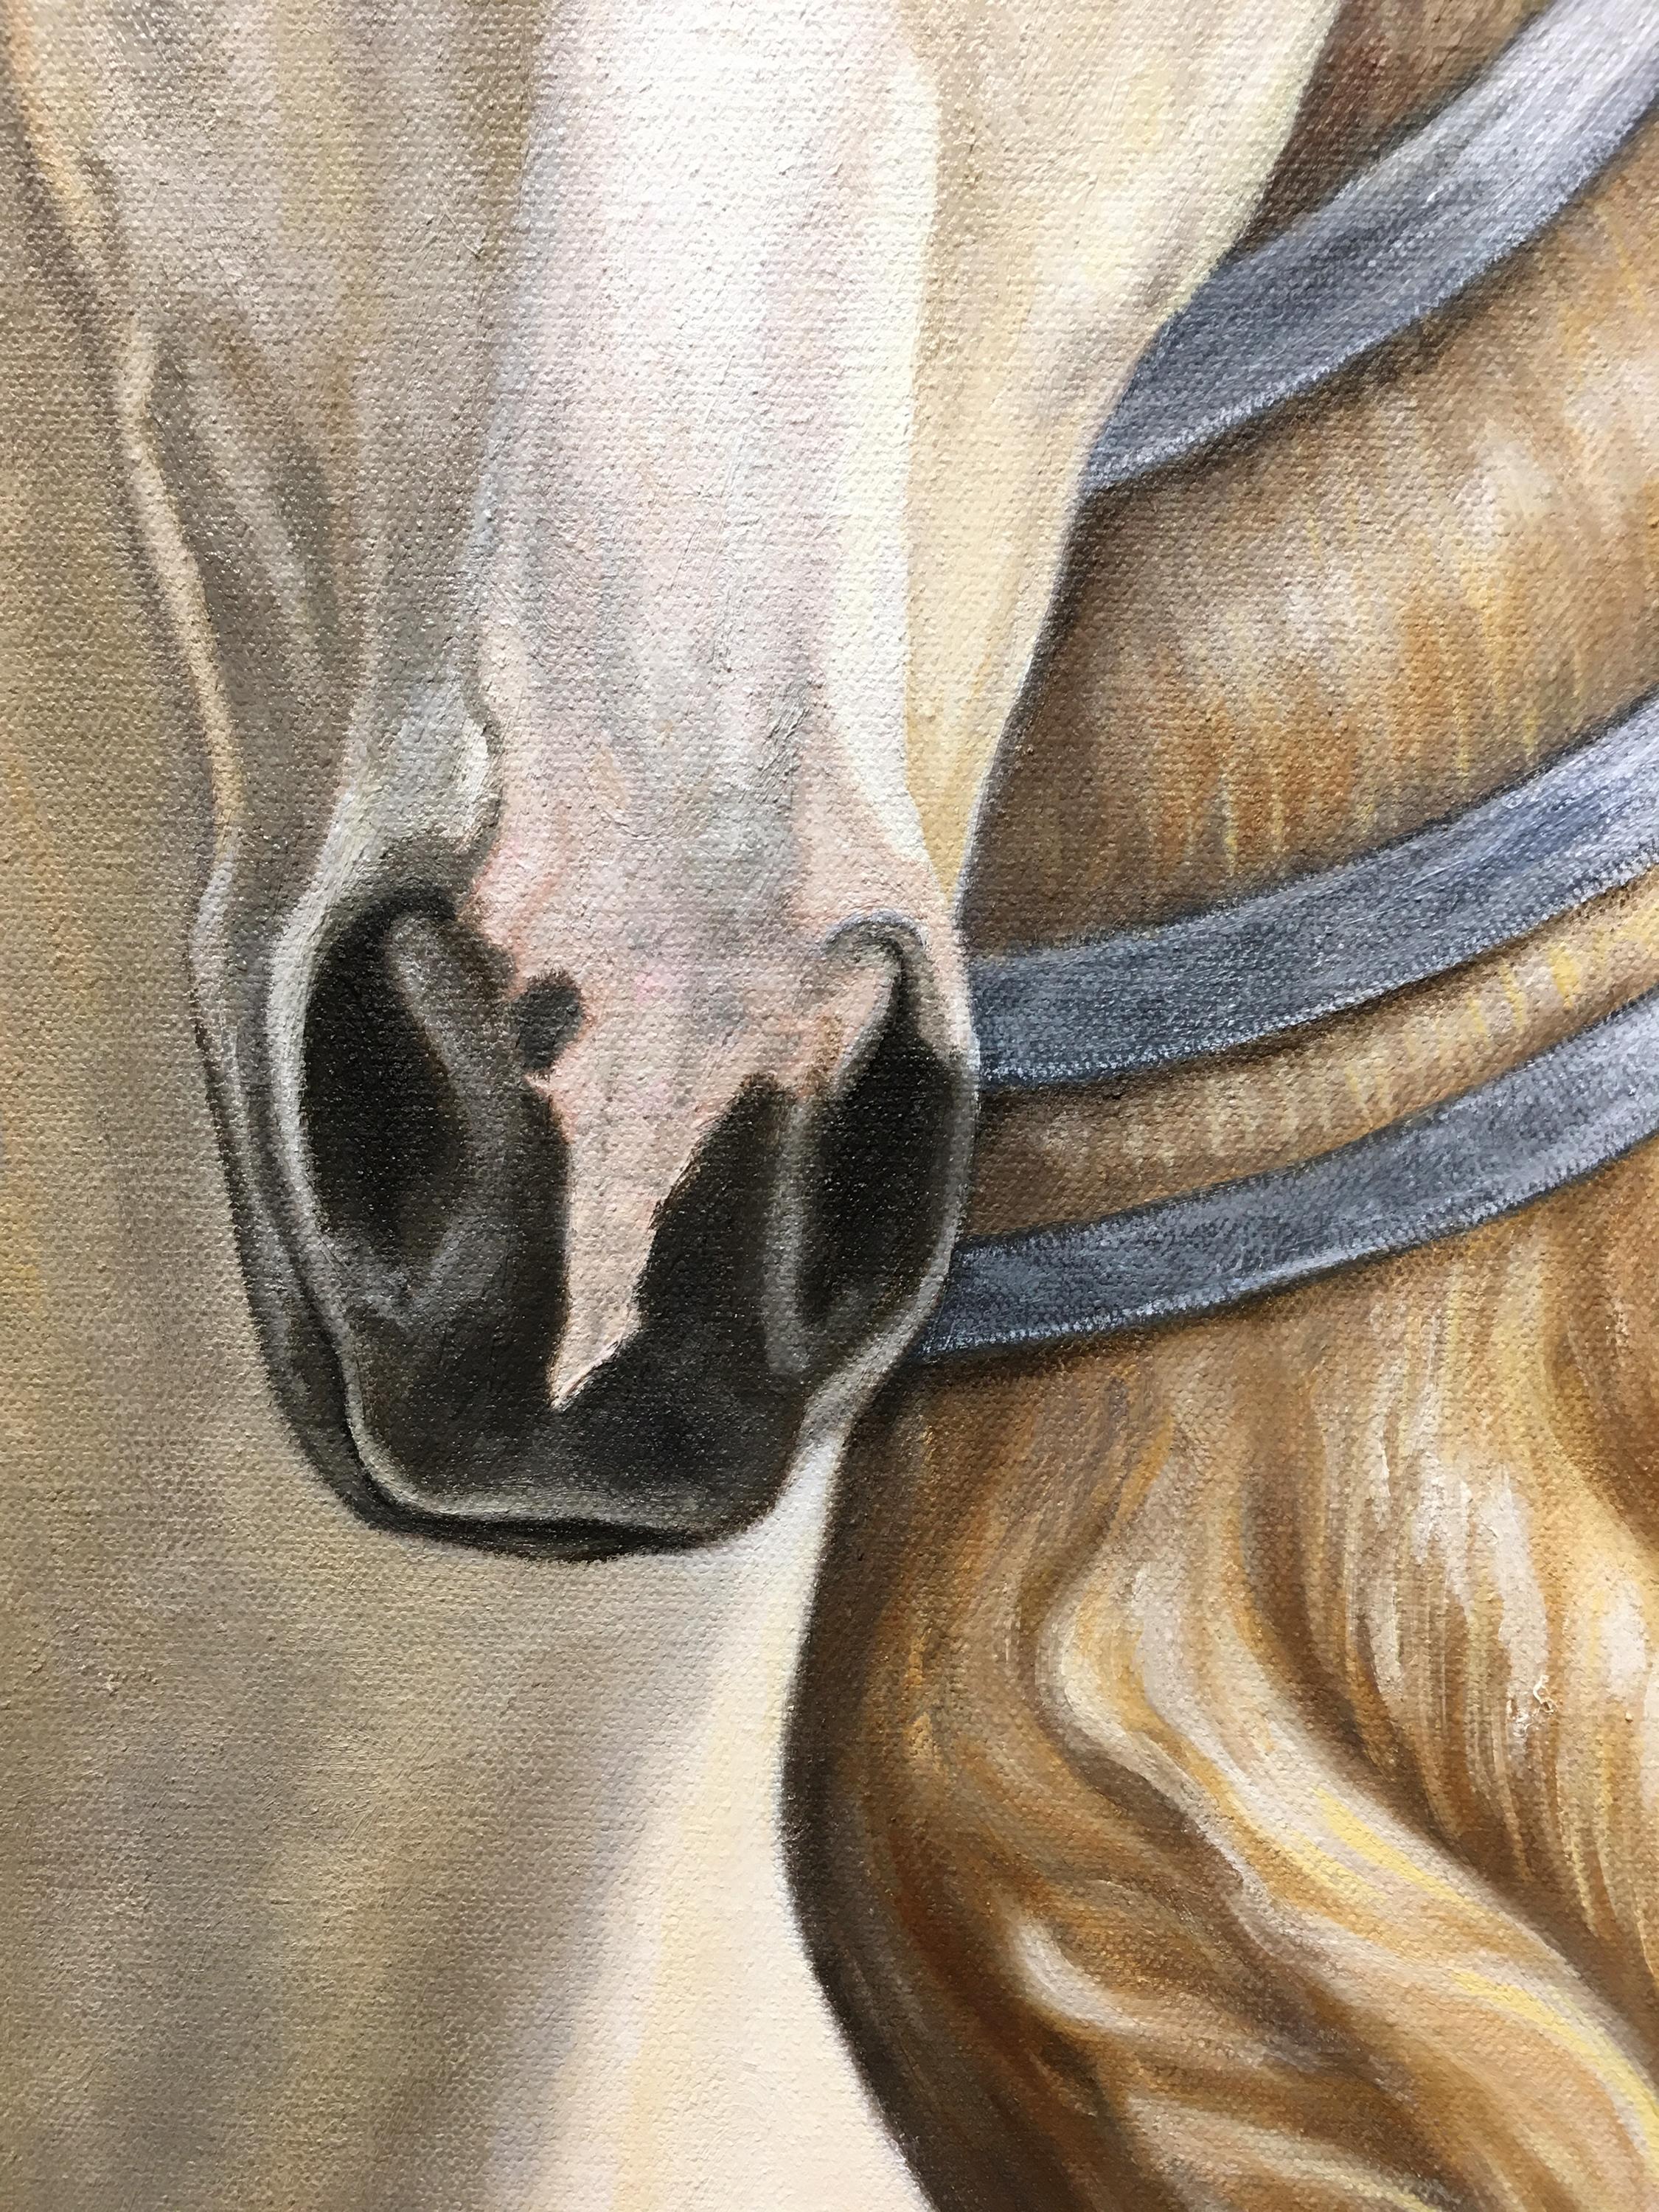 horse paintings